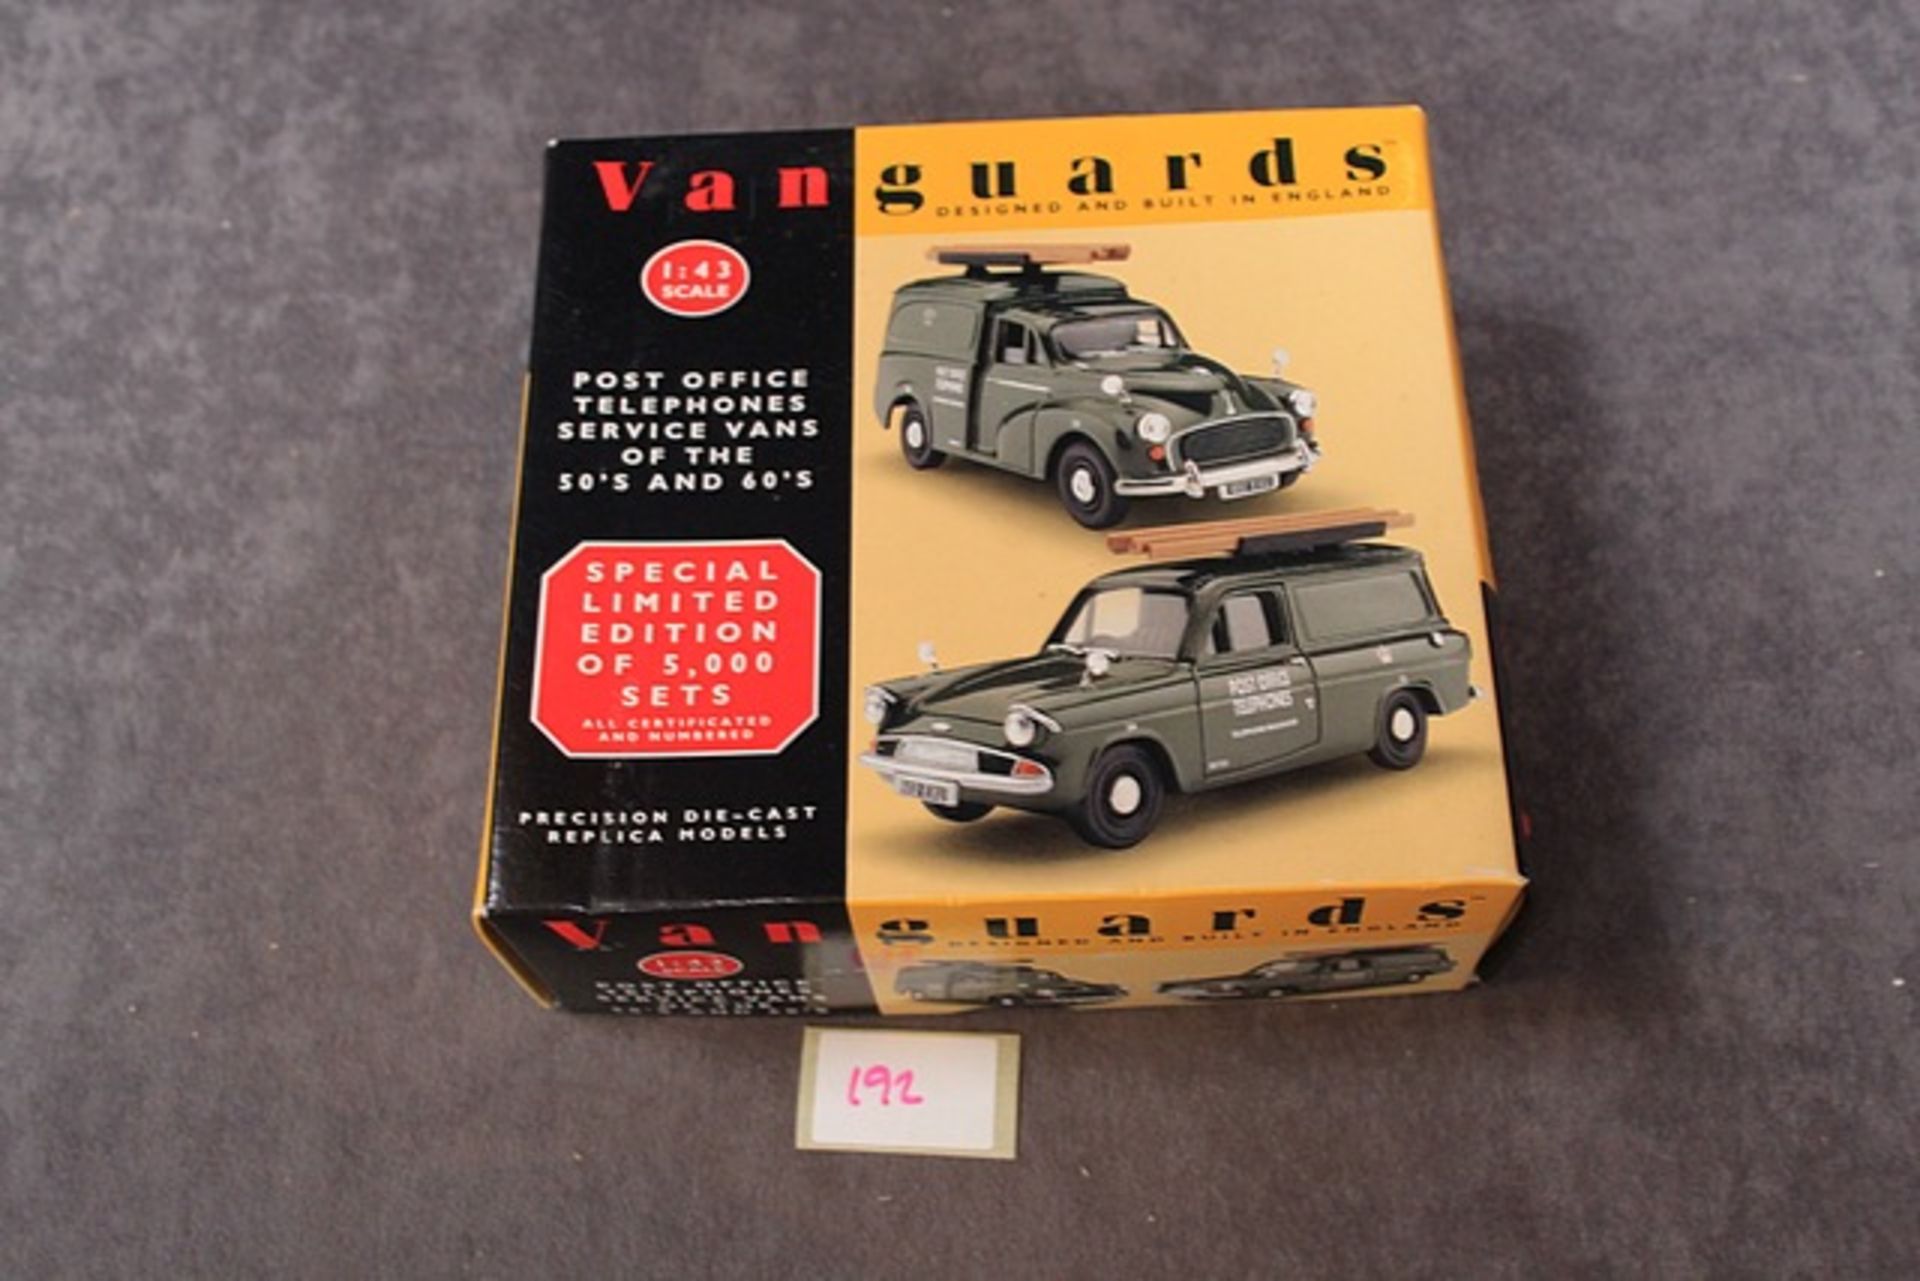 Vanguards Diecast # PO1002 Post Office Telephones Service Vans 50's & 60's In Box - Image 2 of 2